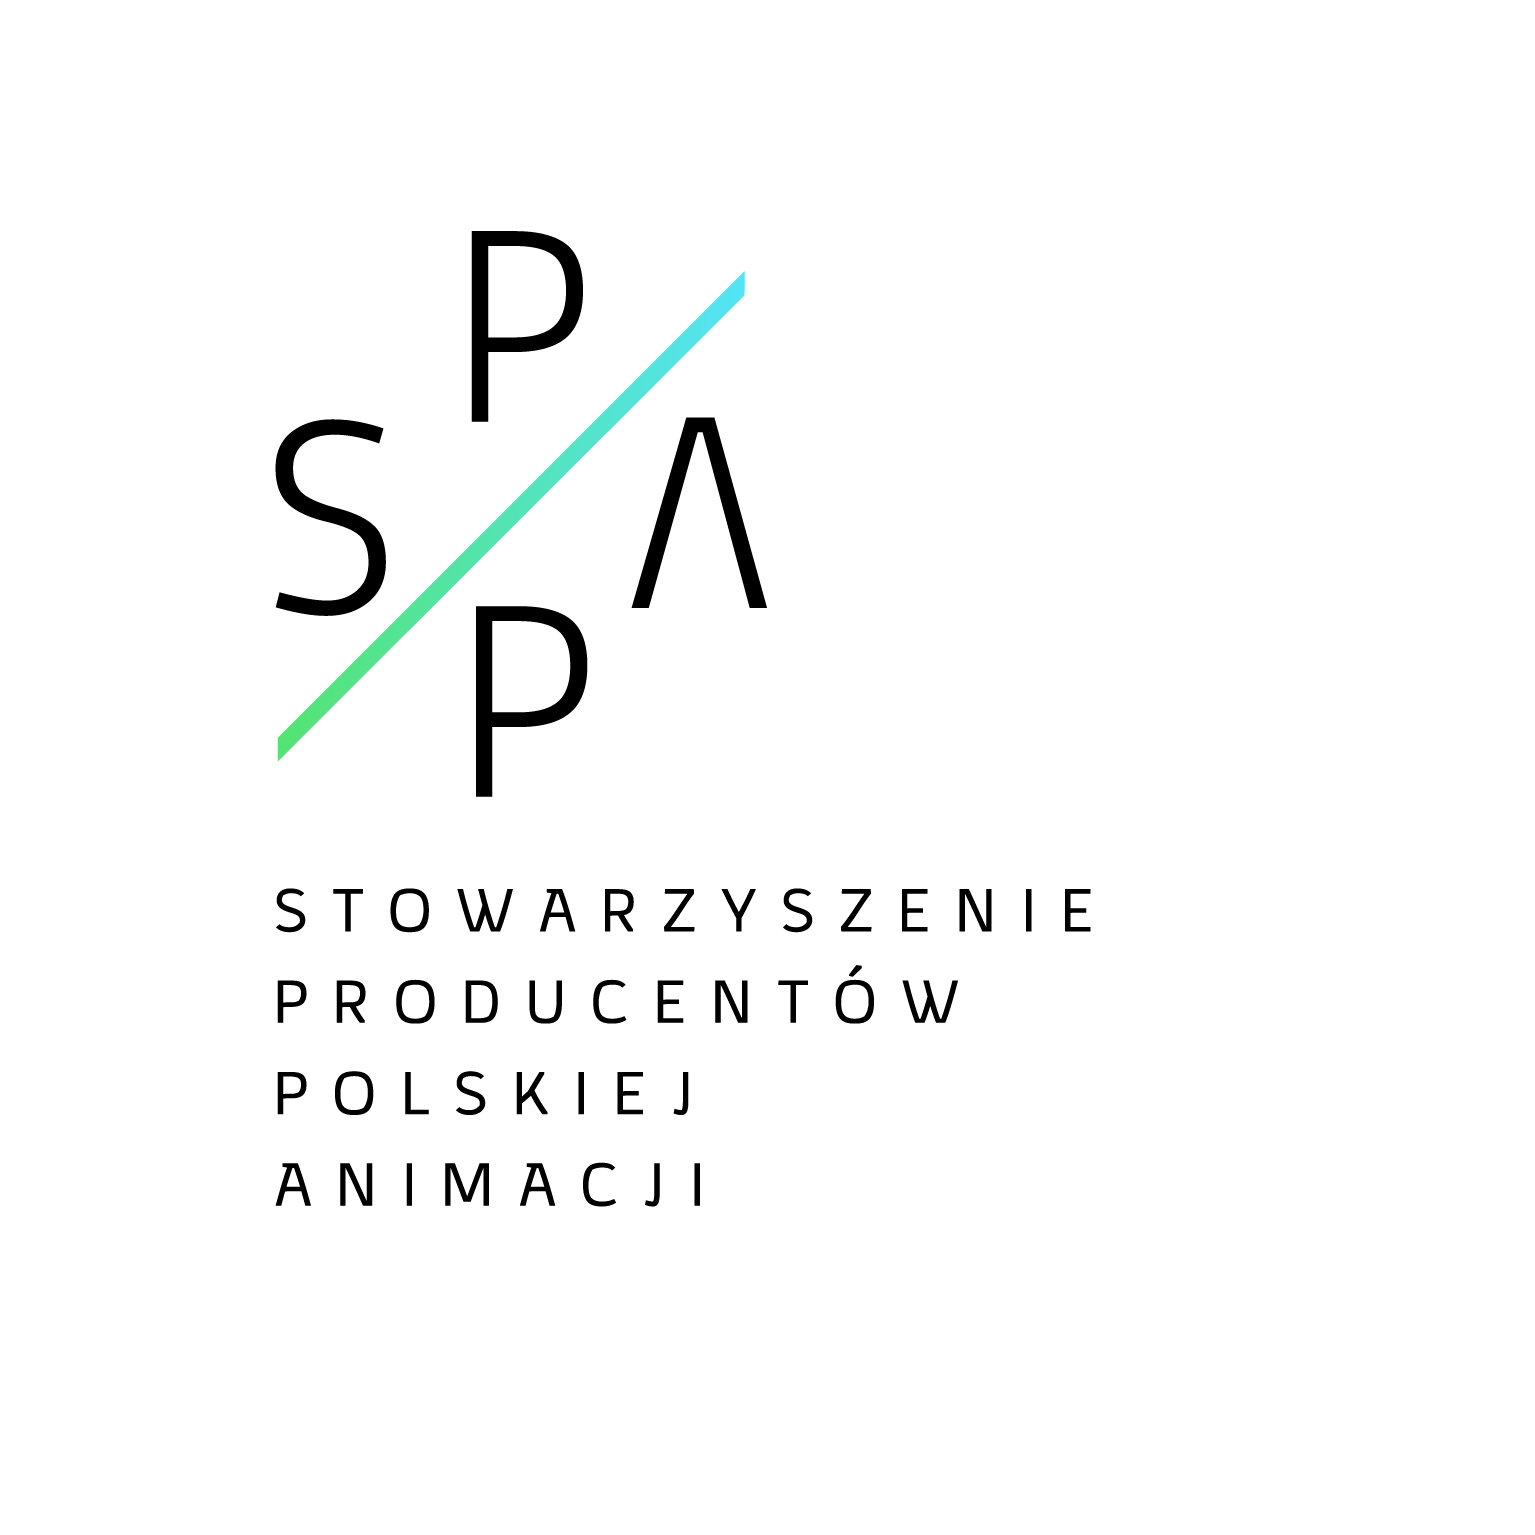 sppa logo pl